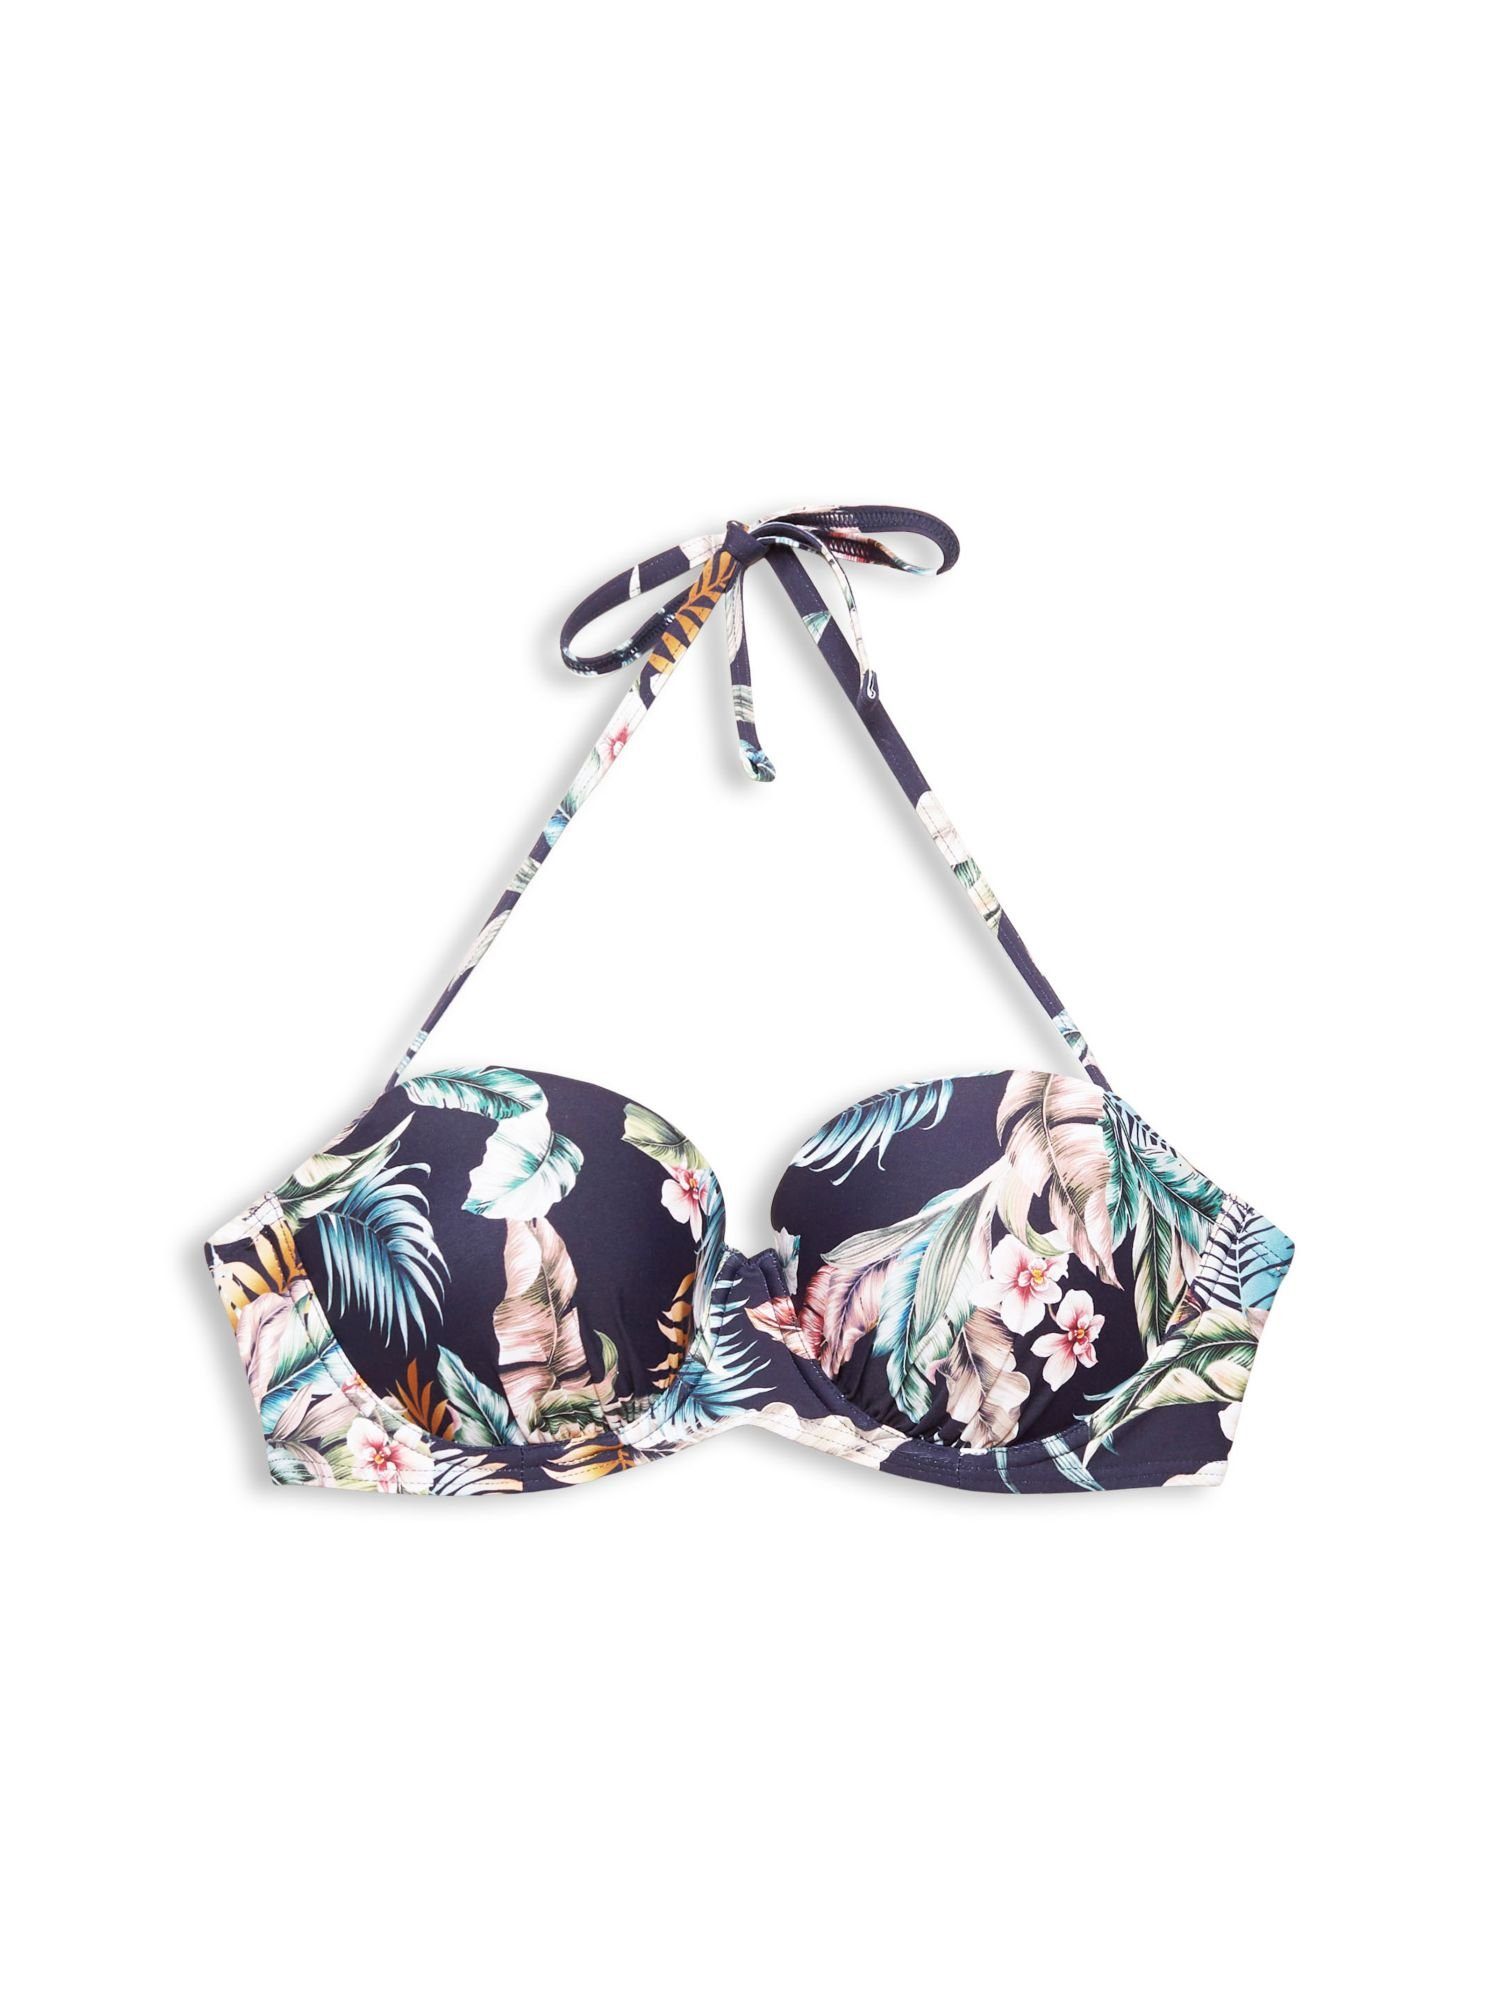 Wäsche/Bademode Bikinis Esprit Bügel-Bikini-Top Recycelt: Bügel-Top mit floralem Print